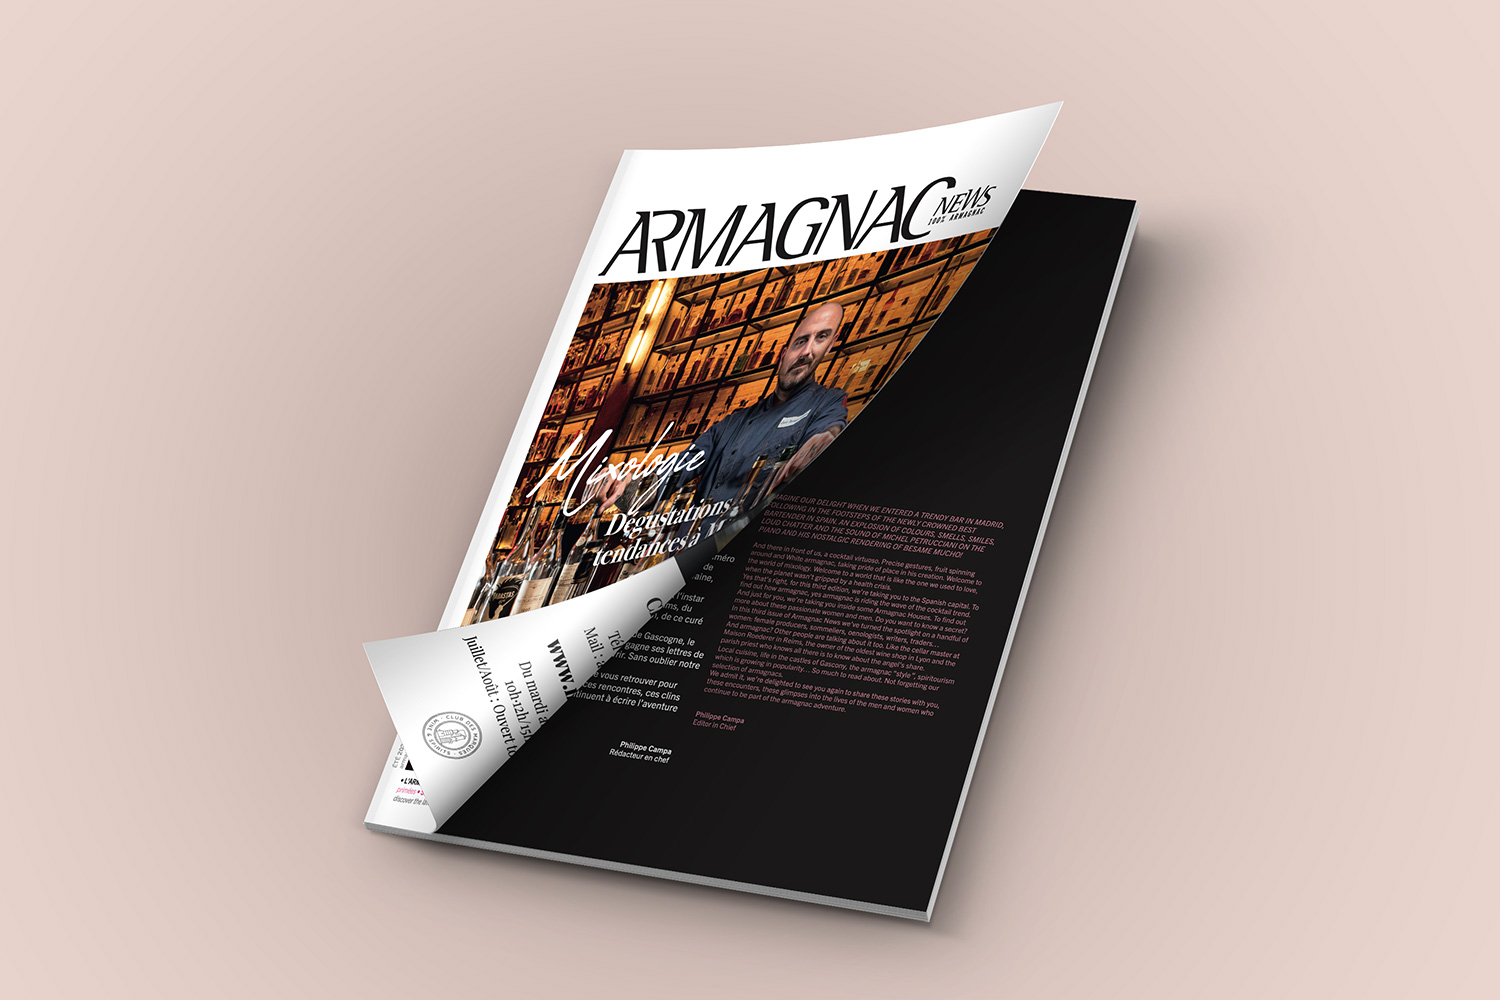 Armagnac News magazine